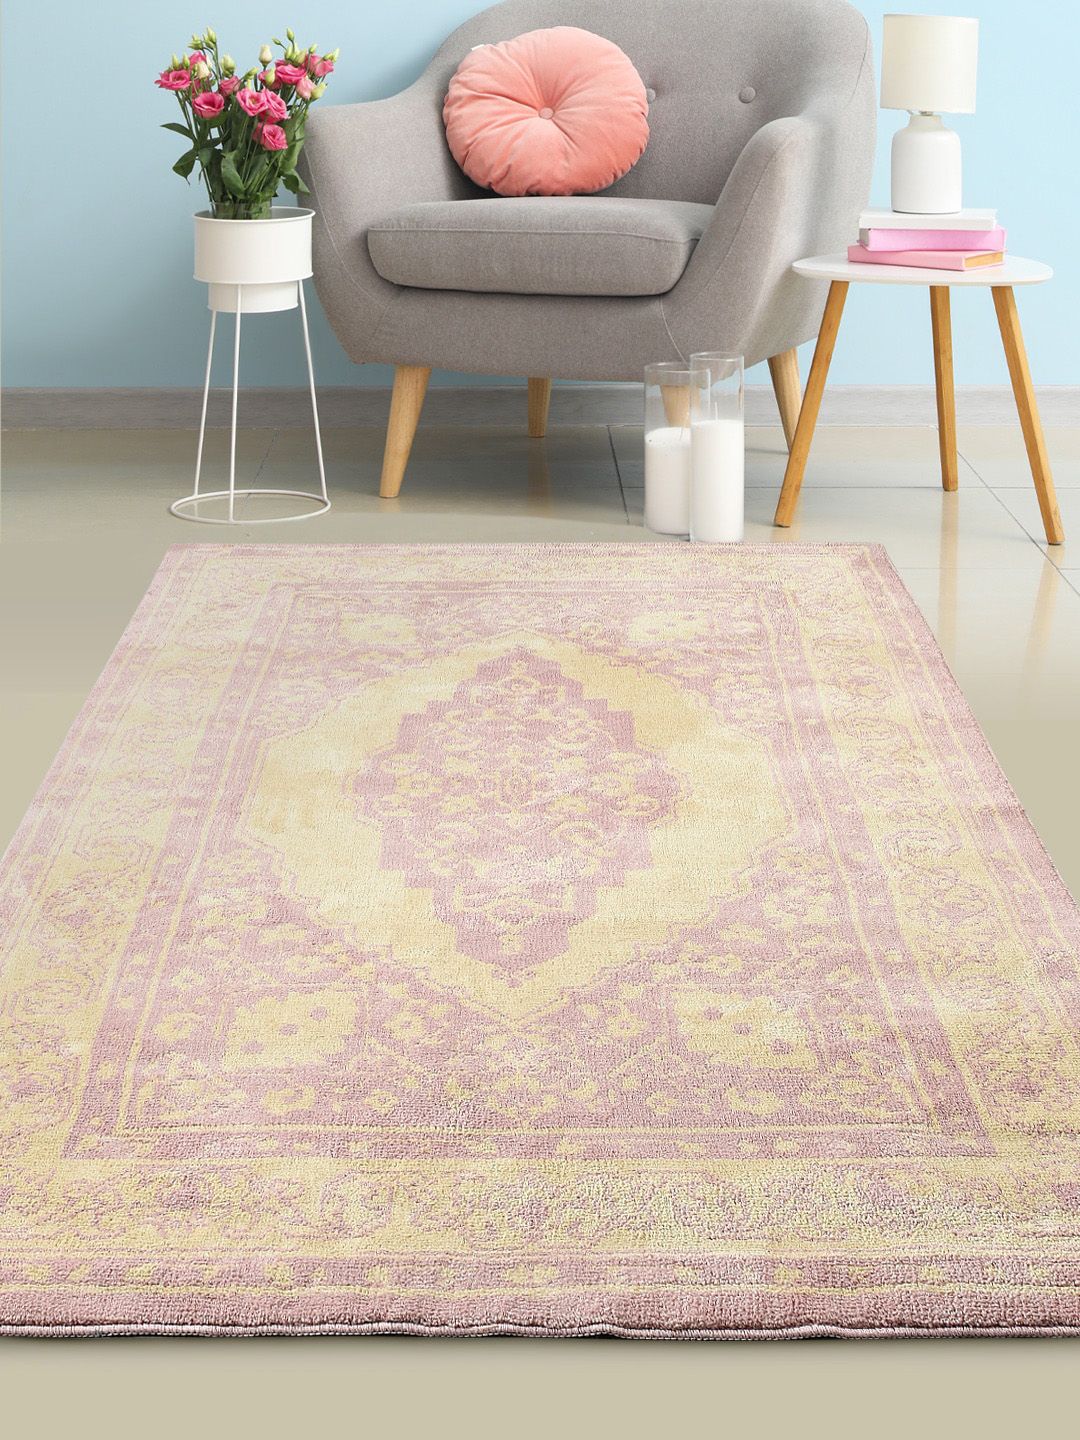 Saral Home Pink & Yellow Printed Cotton Rectangular Carpet Price in India